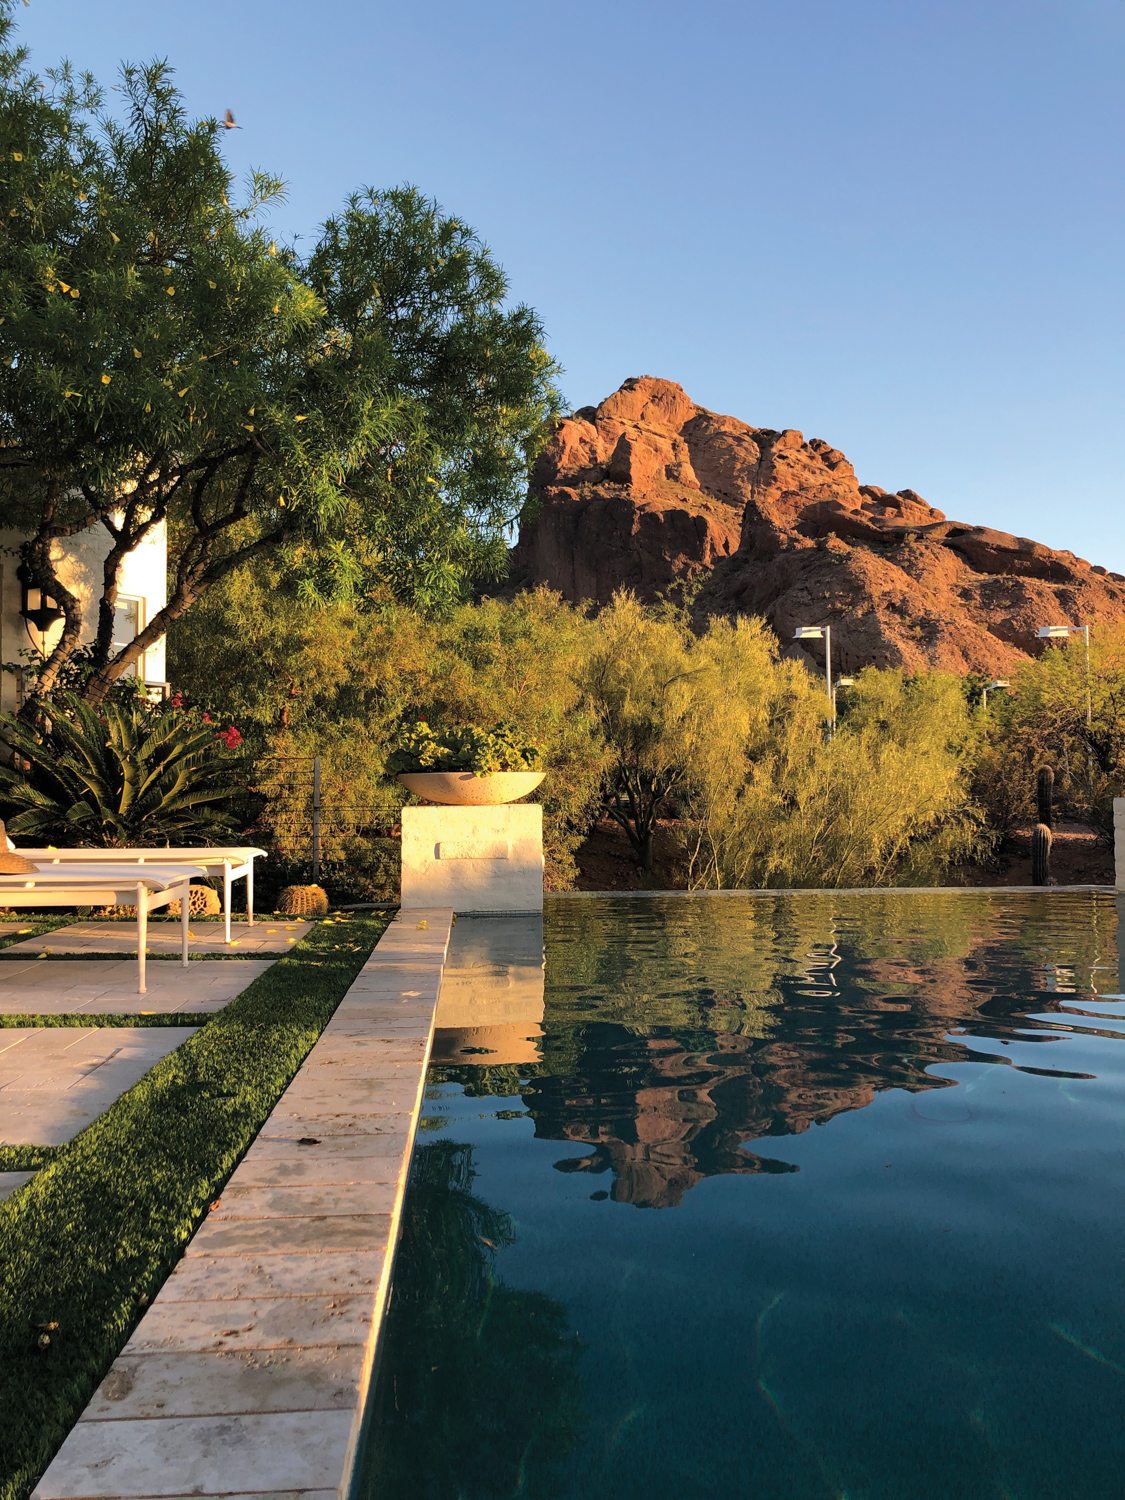 Pool overlooking desert mountains and greenery.